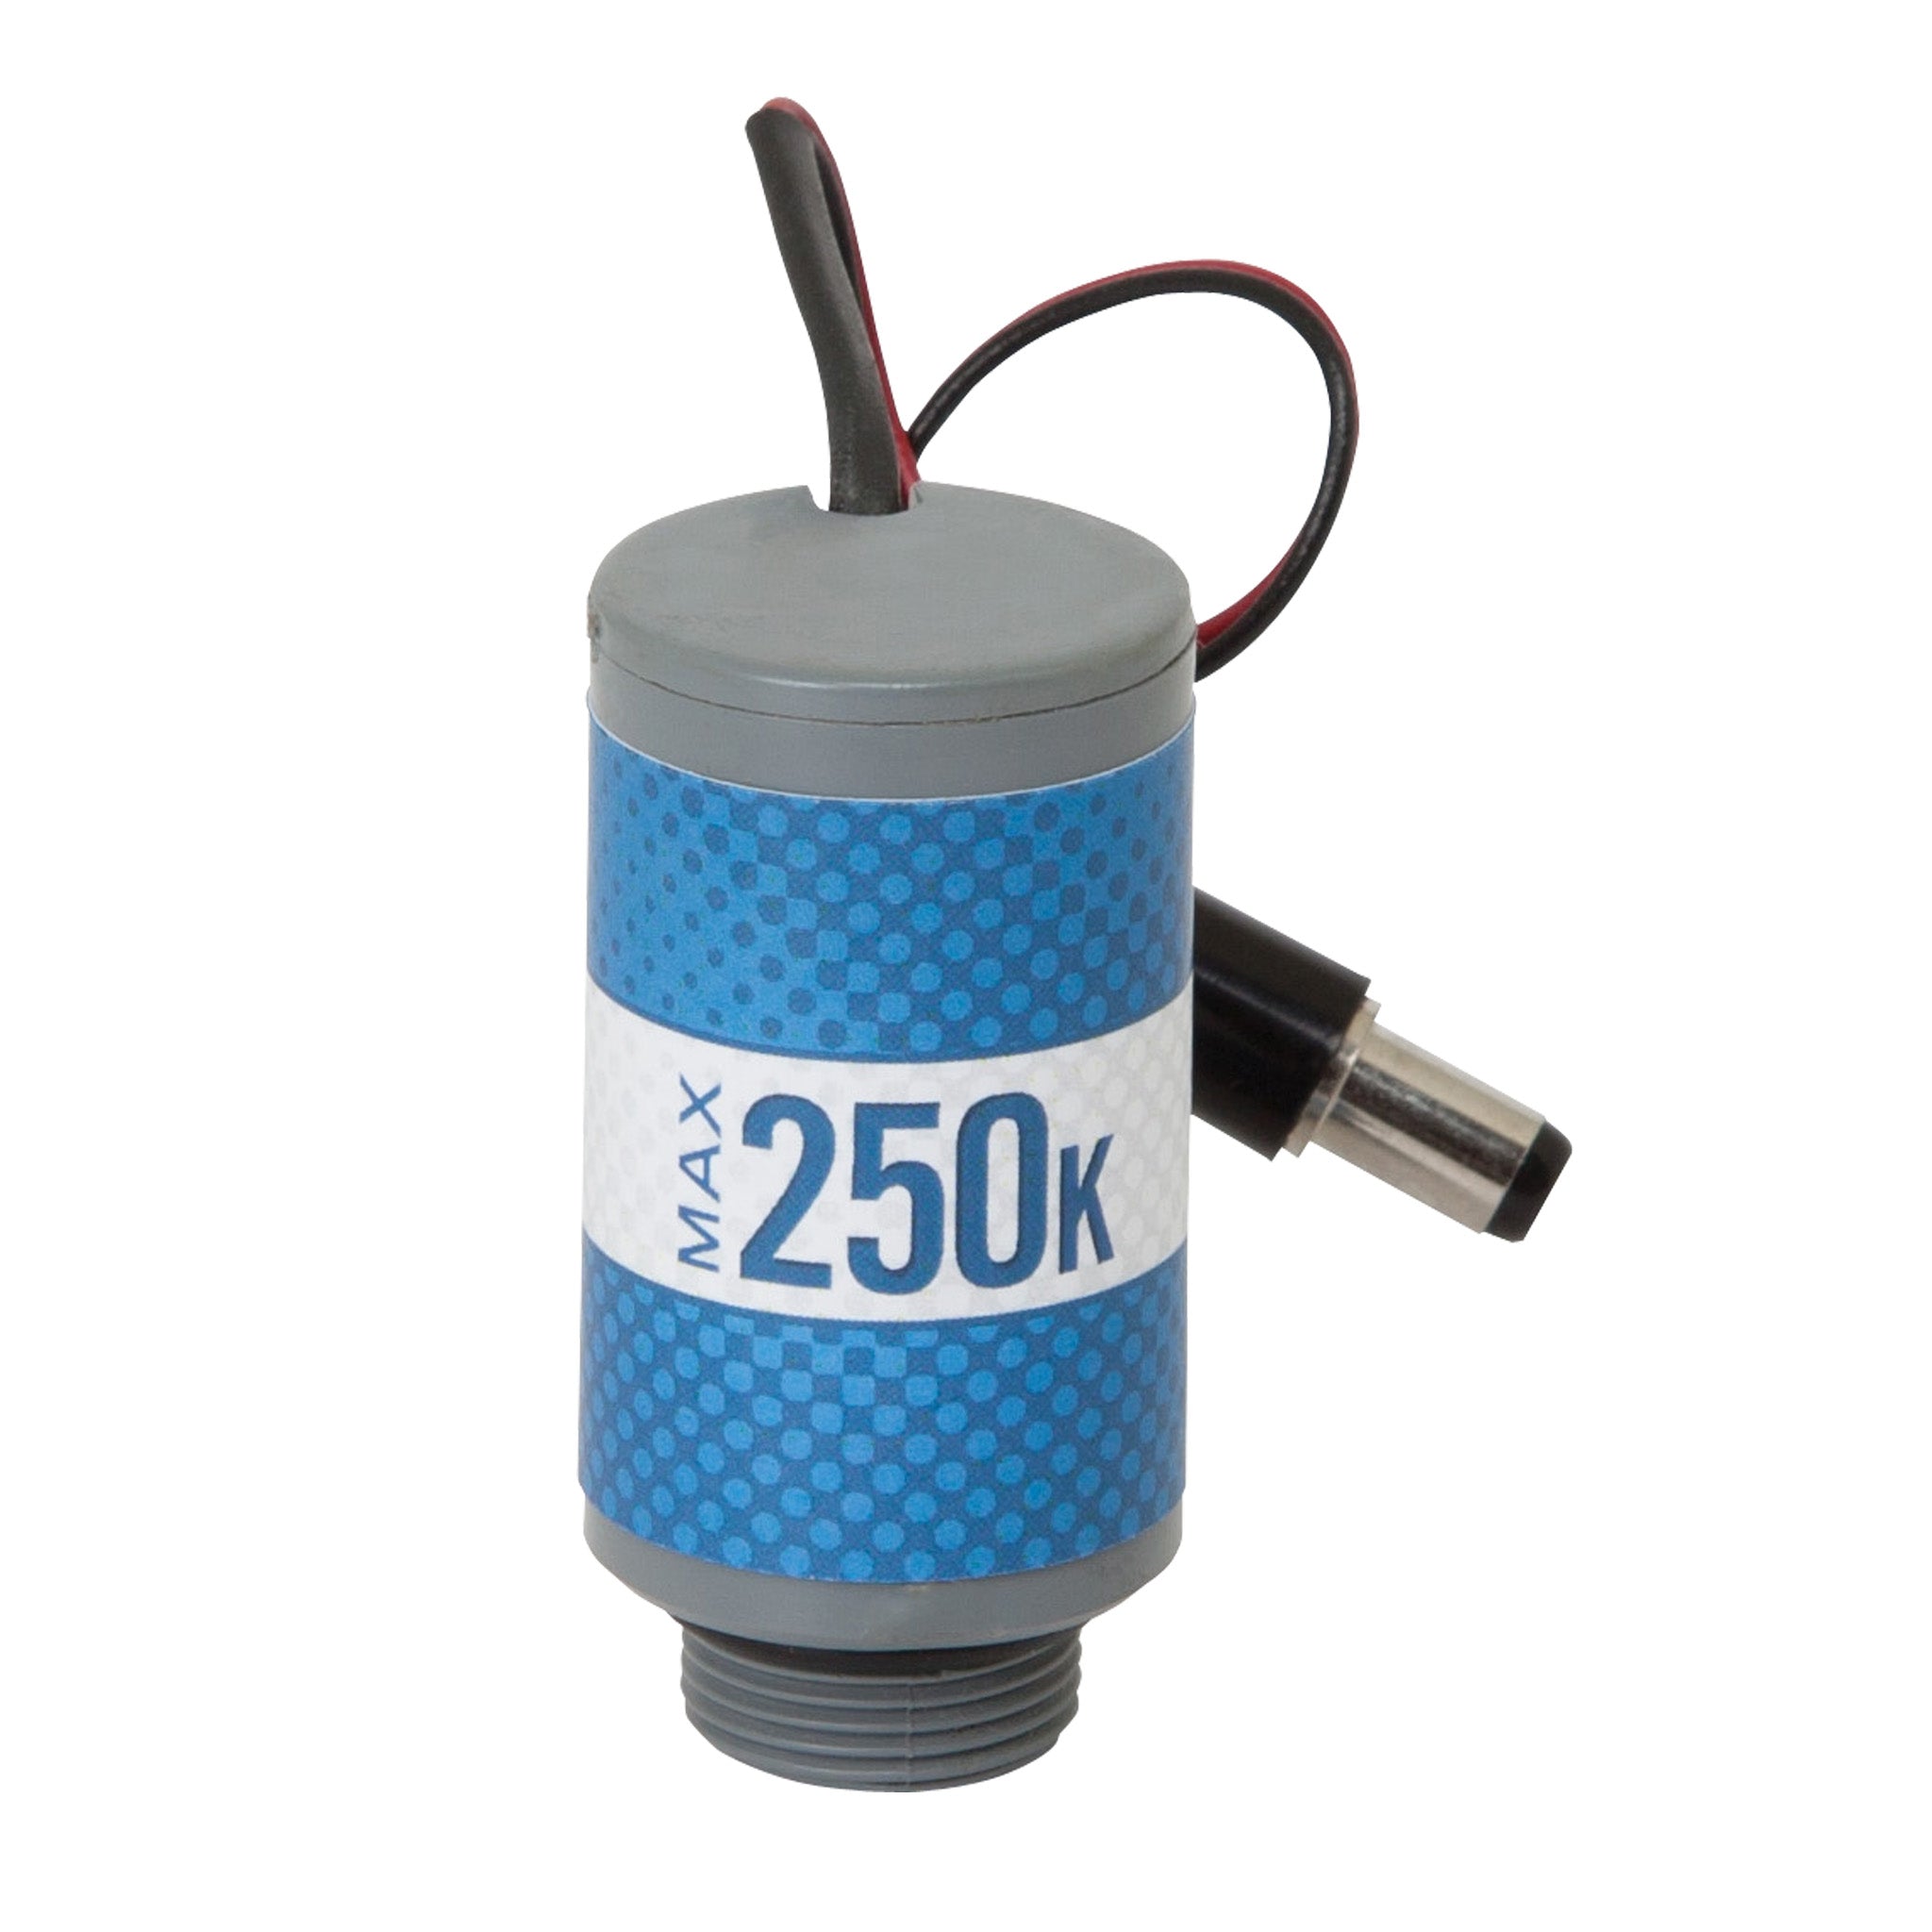 MAX-250K Oxygen Sensor with DC